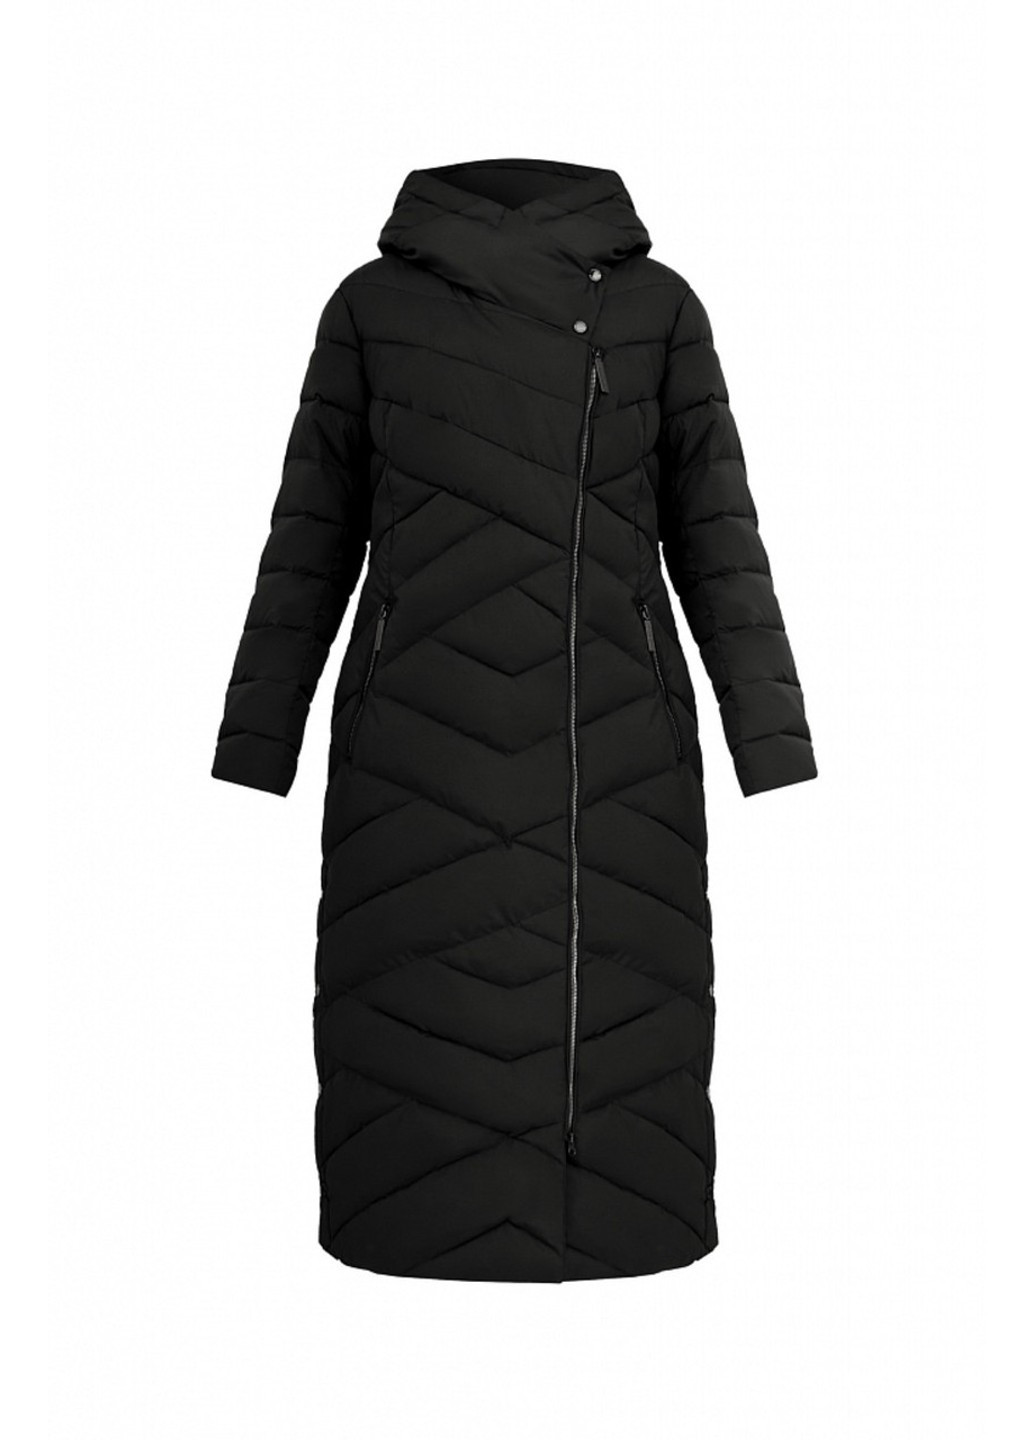 Черная зимняя зимняя куртка va20-11009-200 Finn Flare